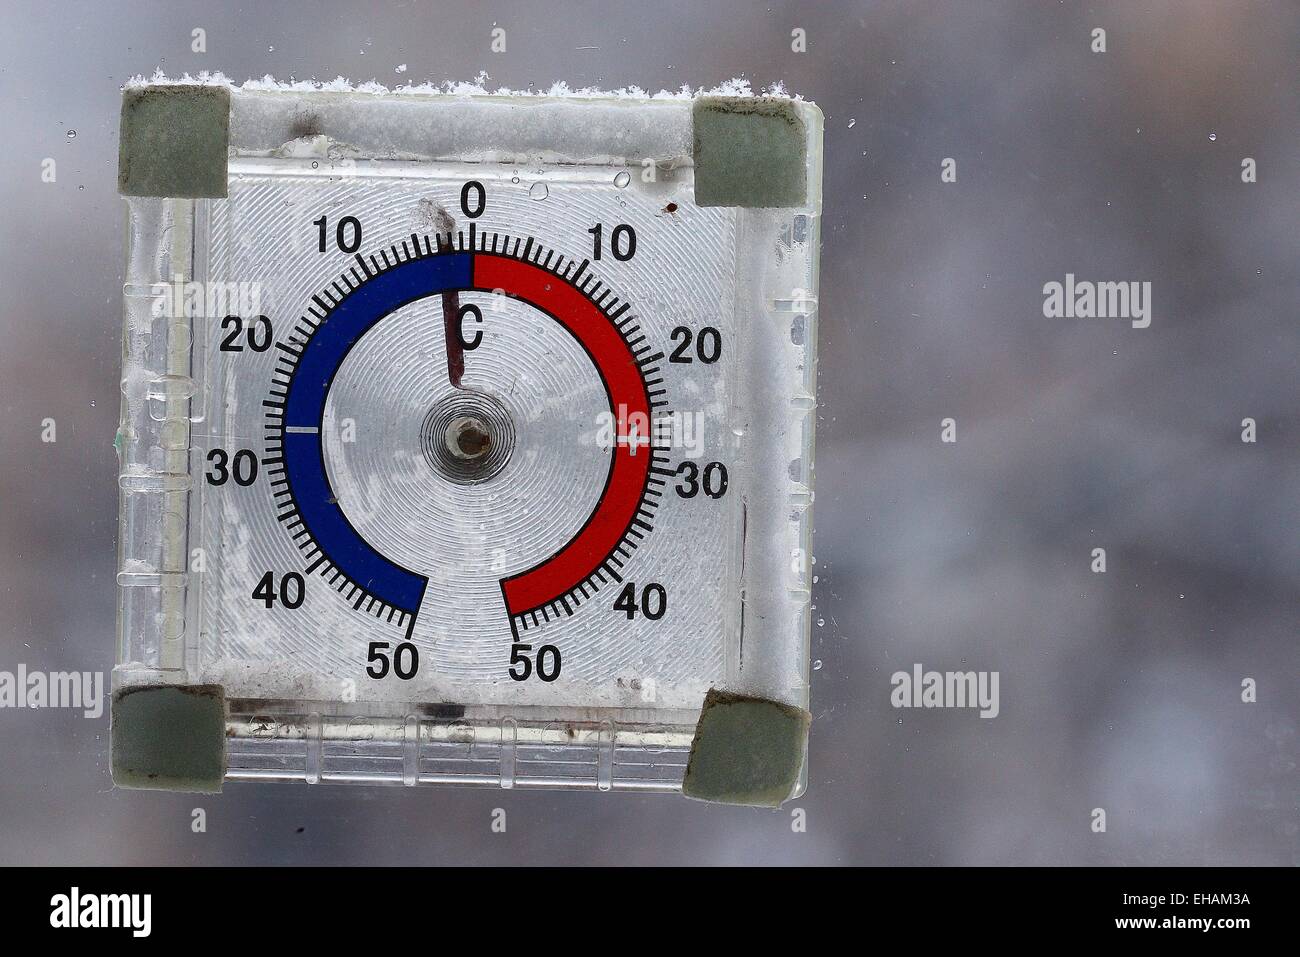 https://c8.alamy.com/comp/EHAM3A/thermometer-outdoors-snow-winter-cold-snap-EHAM3A.jpg